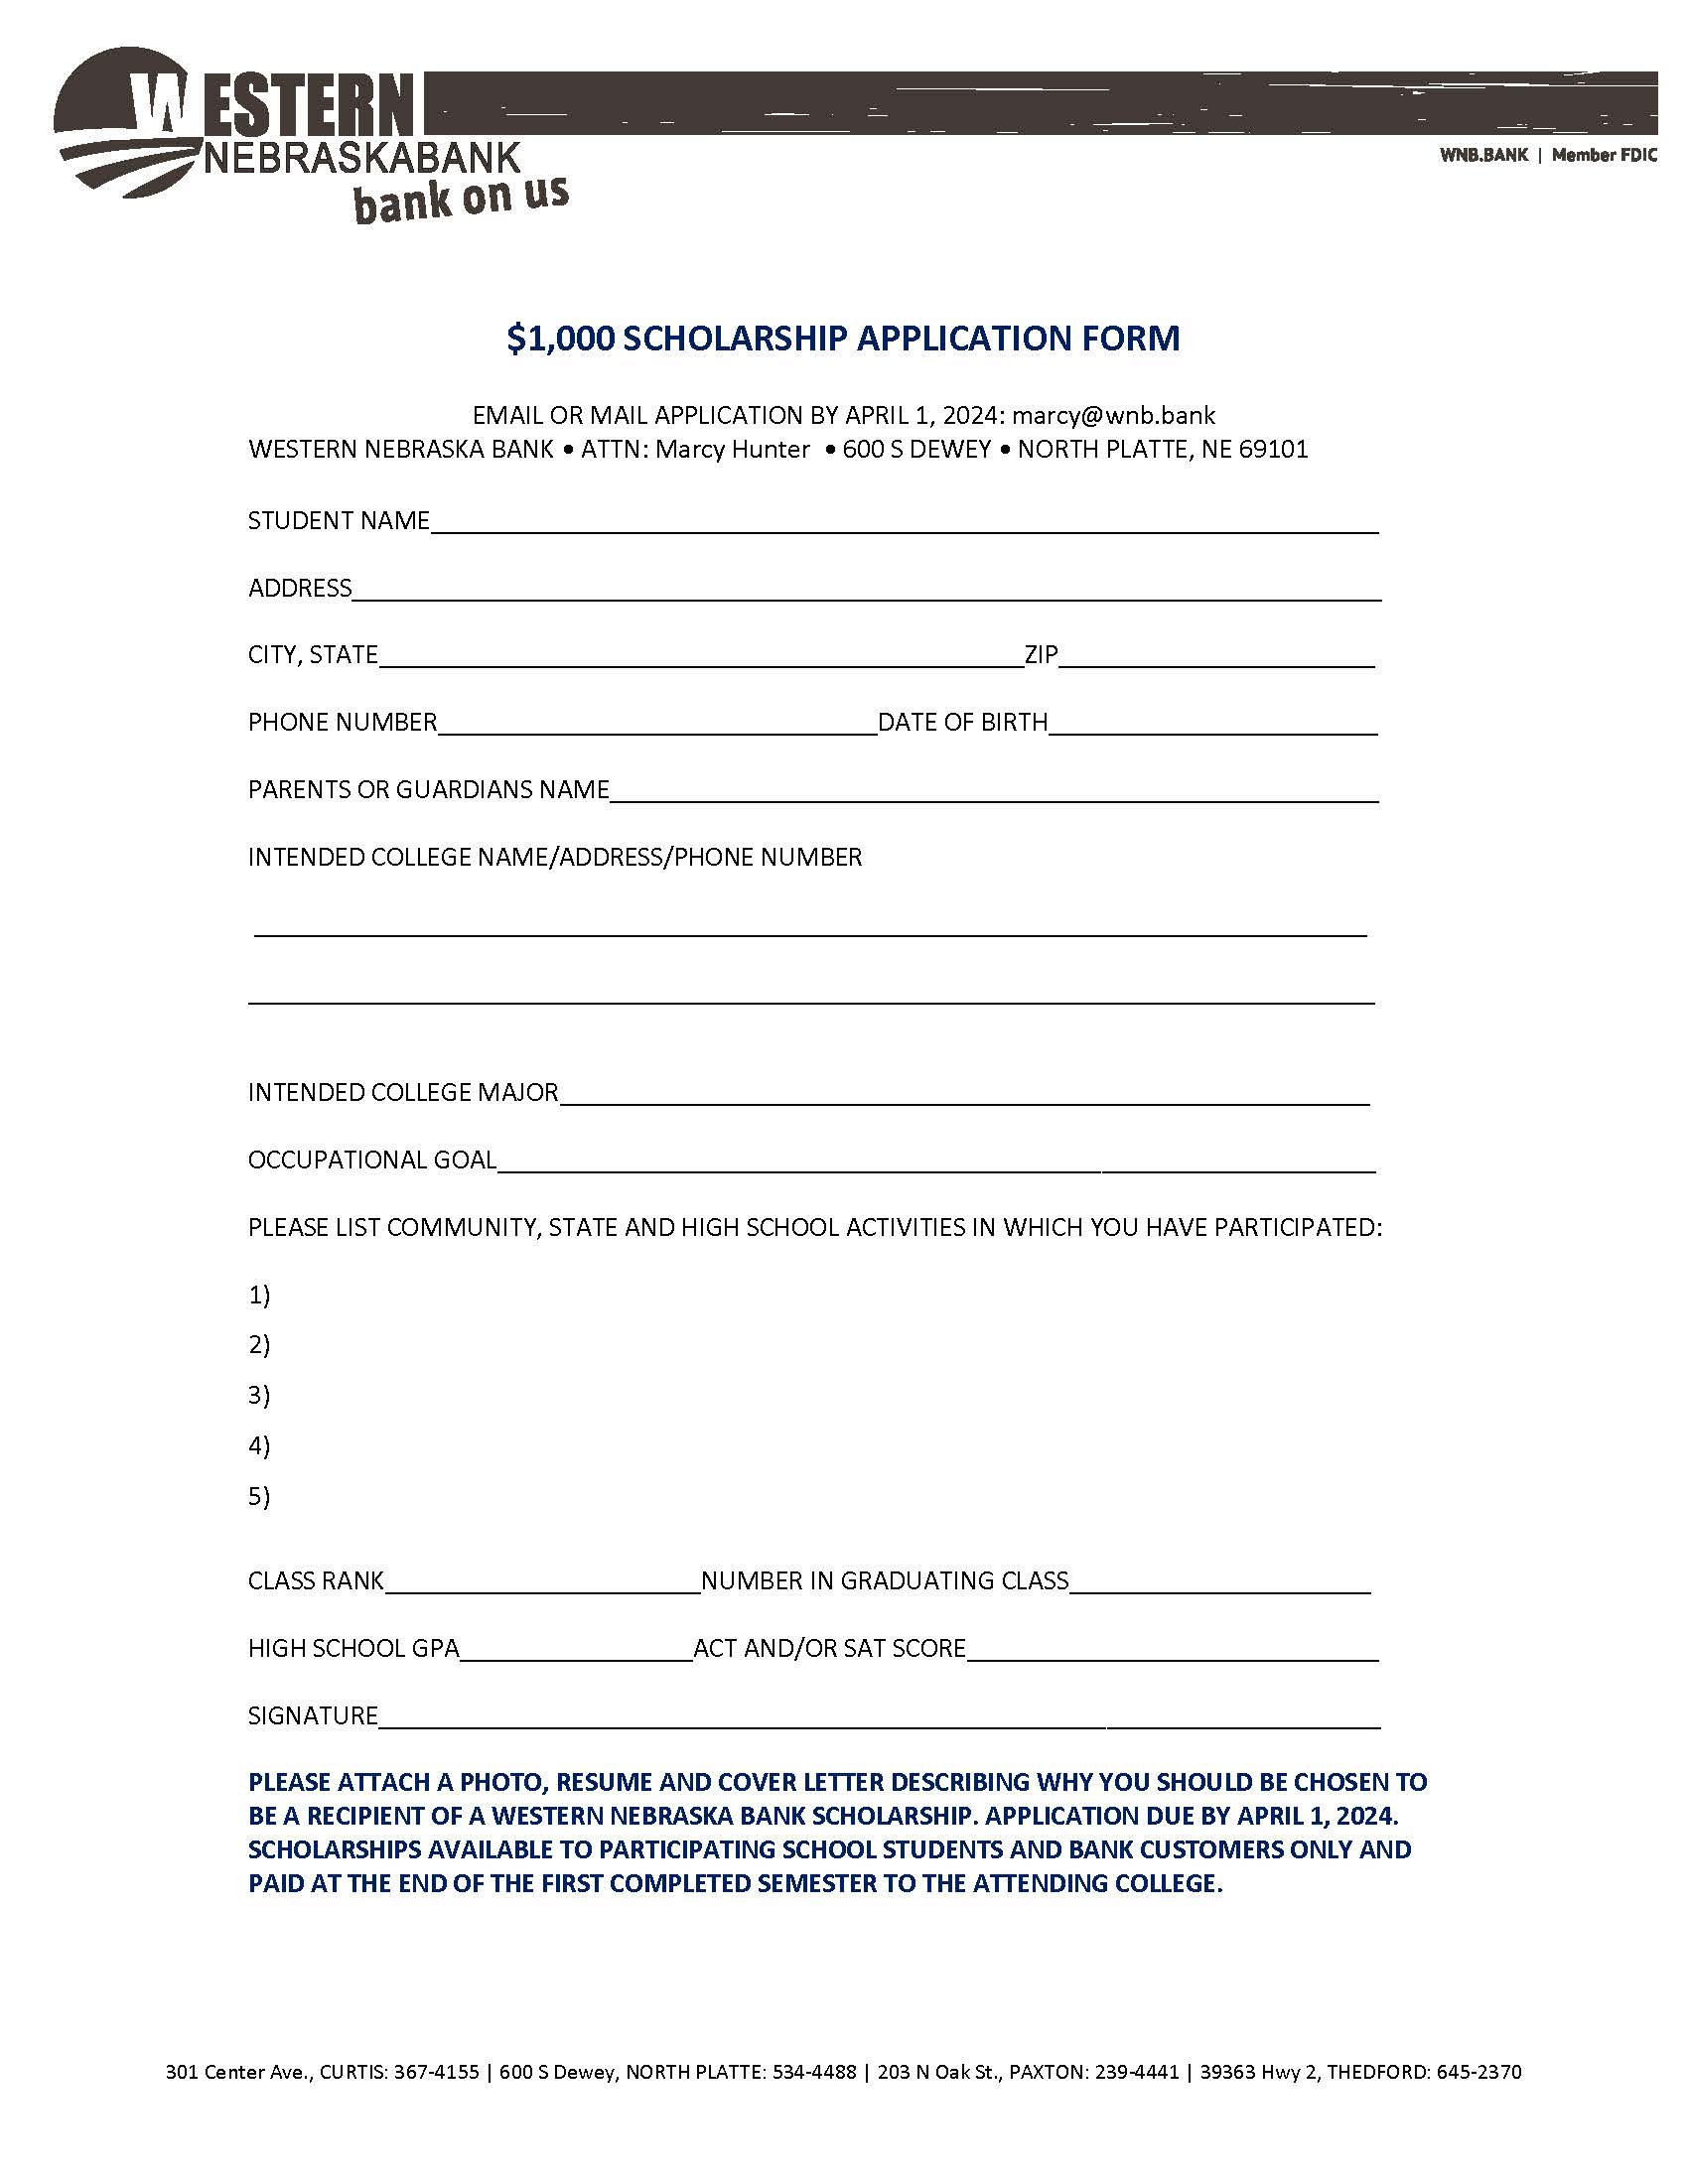 WNB Scholarship Application